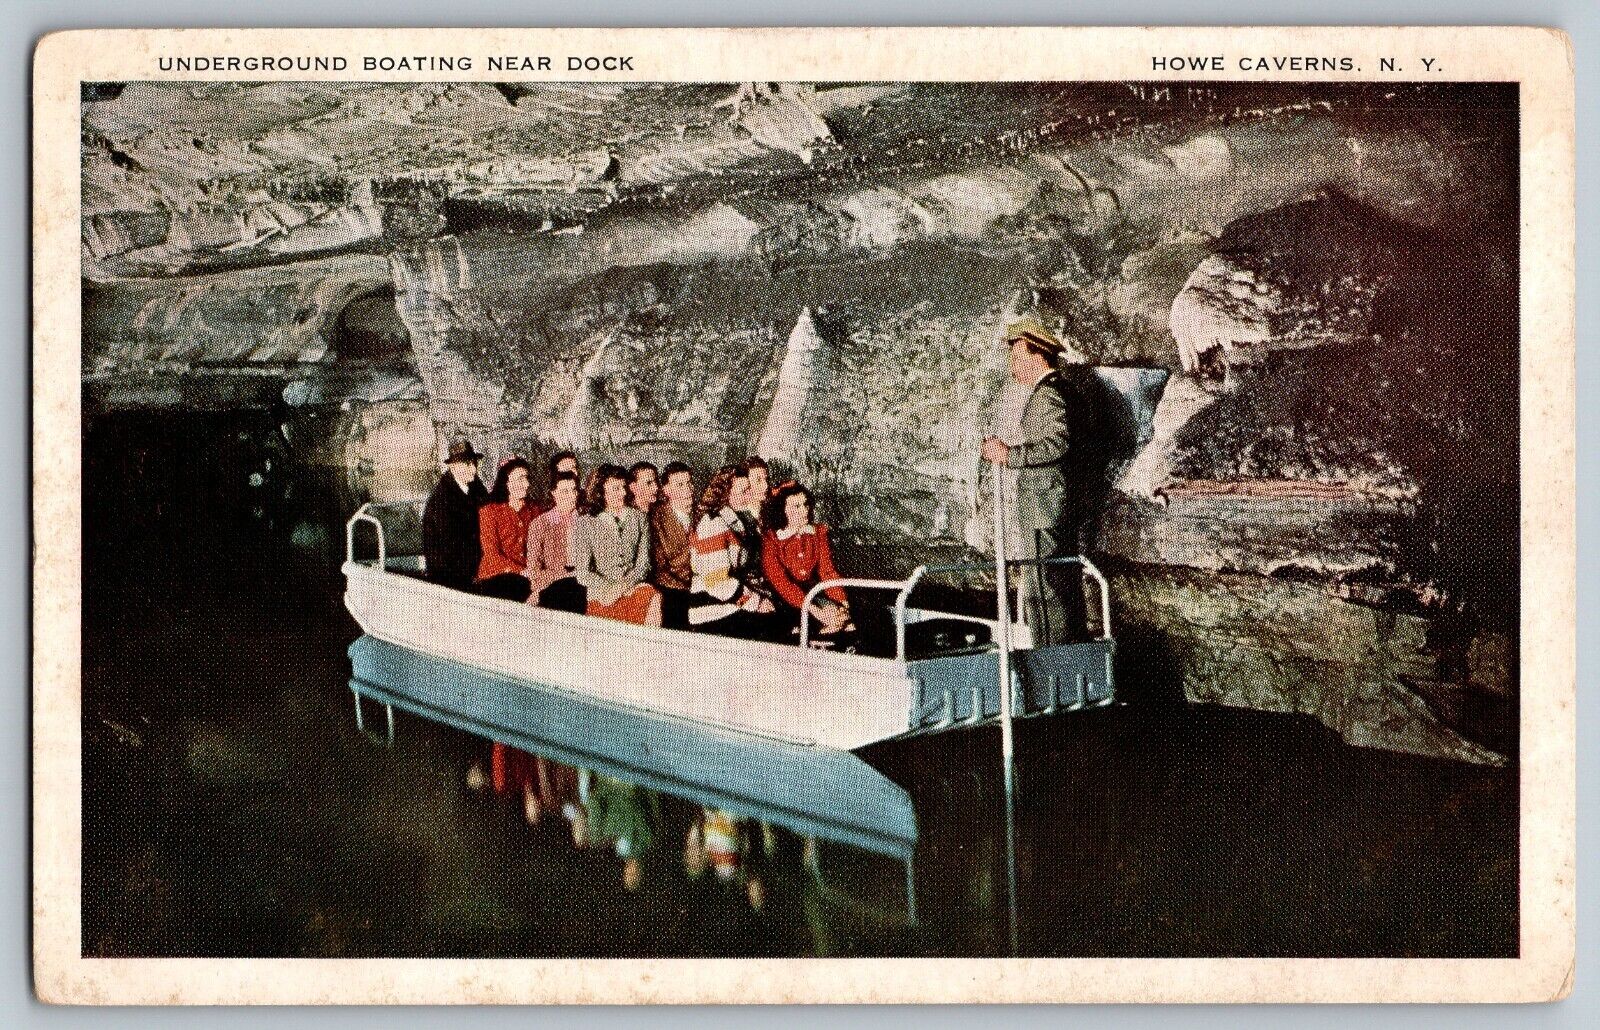 Howe Cavern, New York - Underground Boating on the Lakes - Vintage Postcard